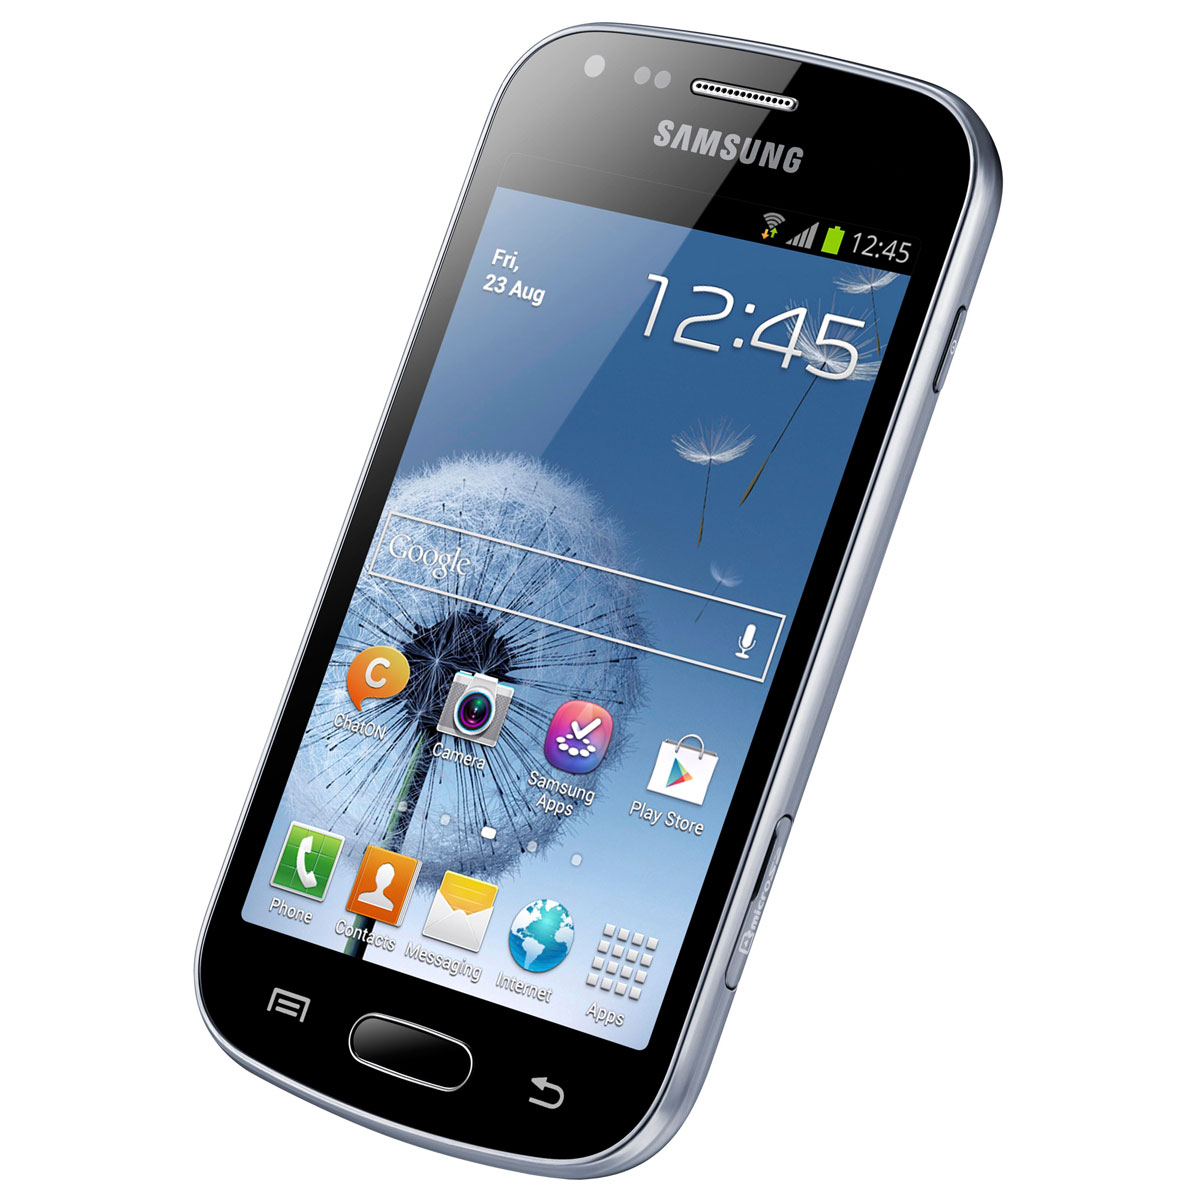 Samsung Galaxy Trend GT-S7560 Noir - Mobile & smartphone